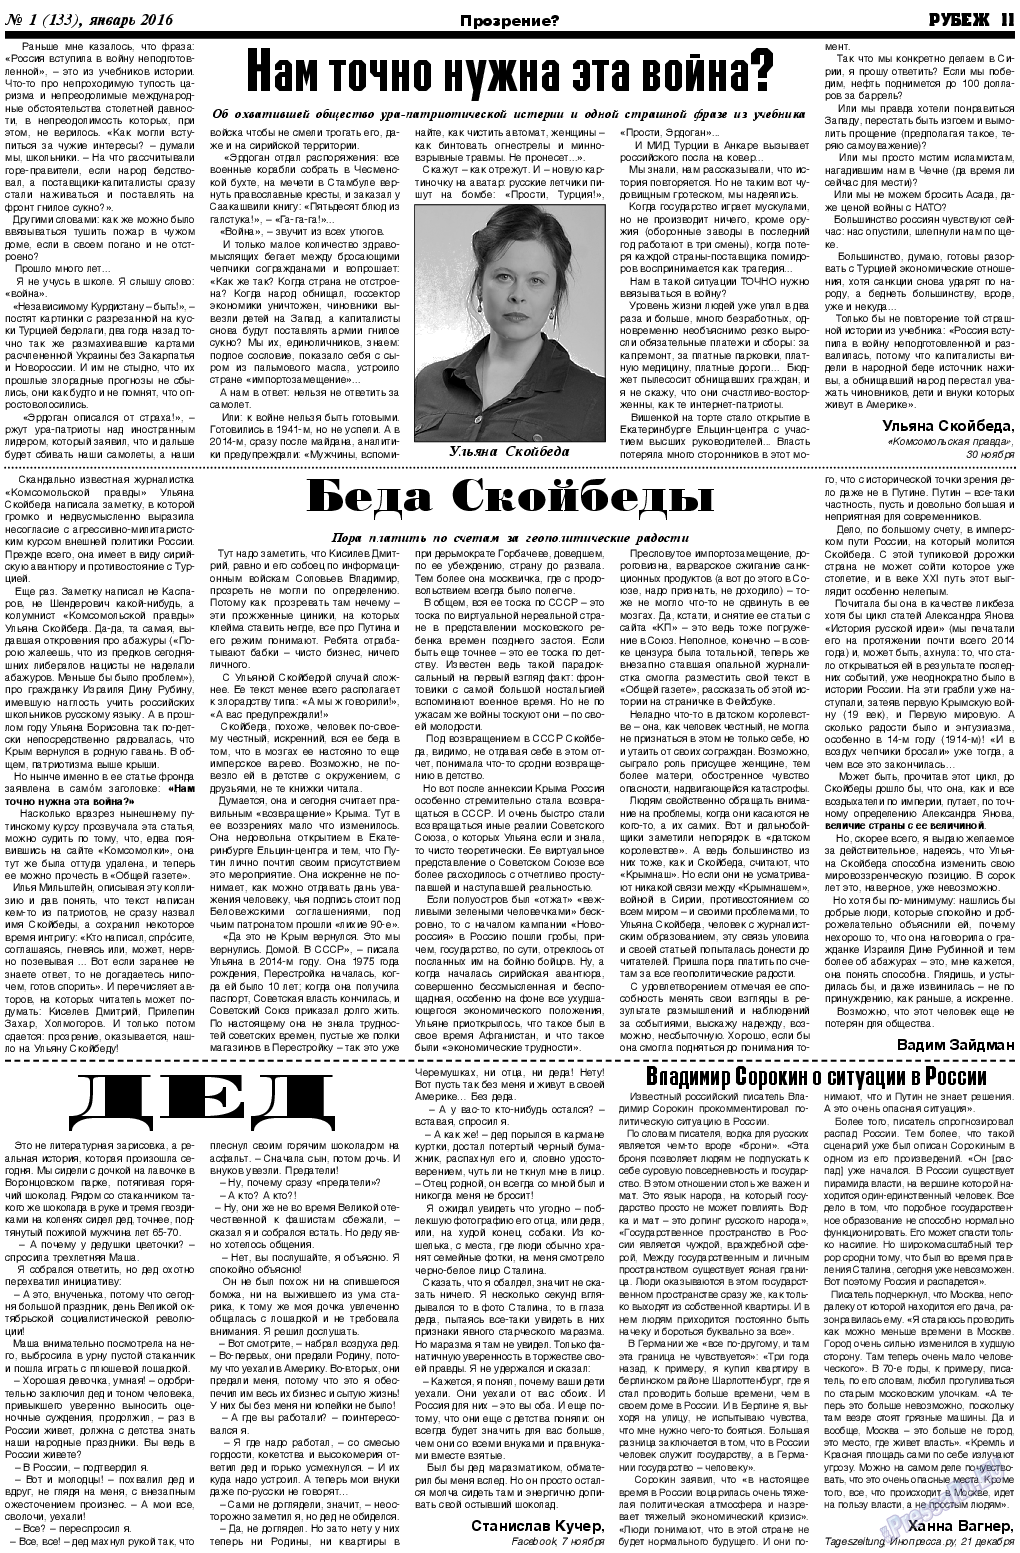 Рубеж, газета. 2016 №1 стр.11